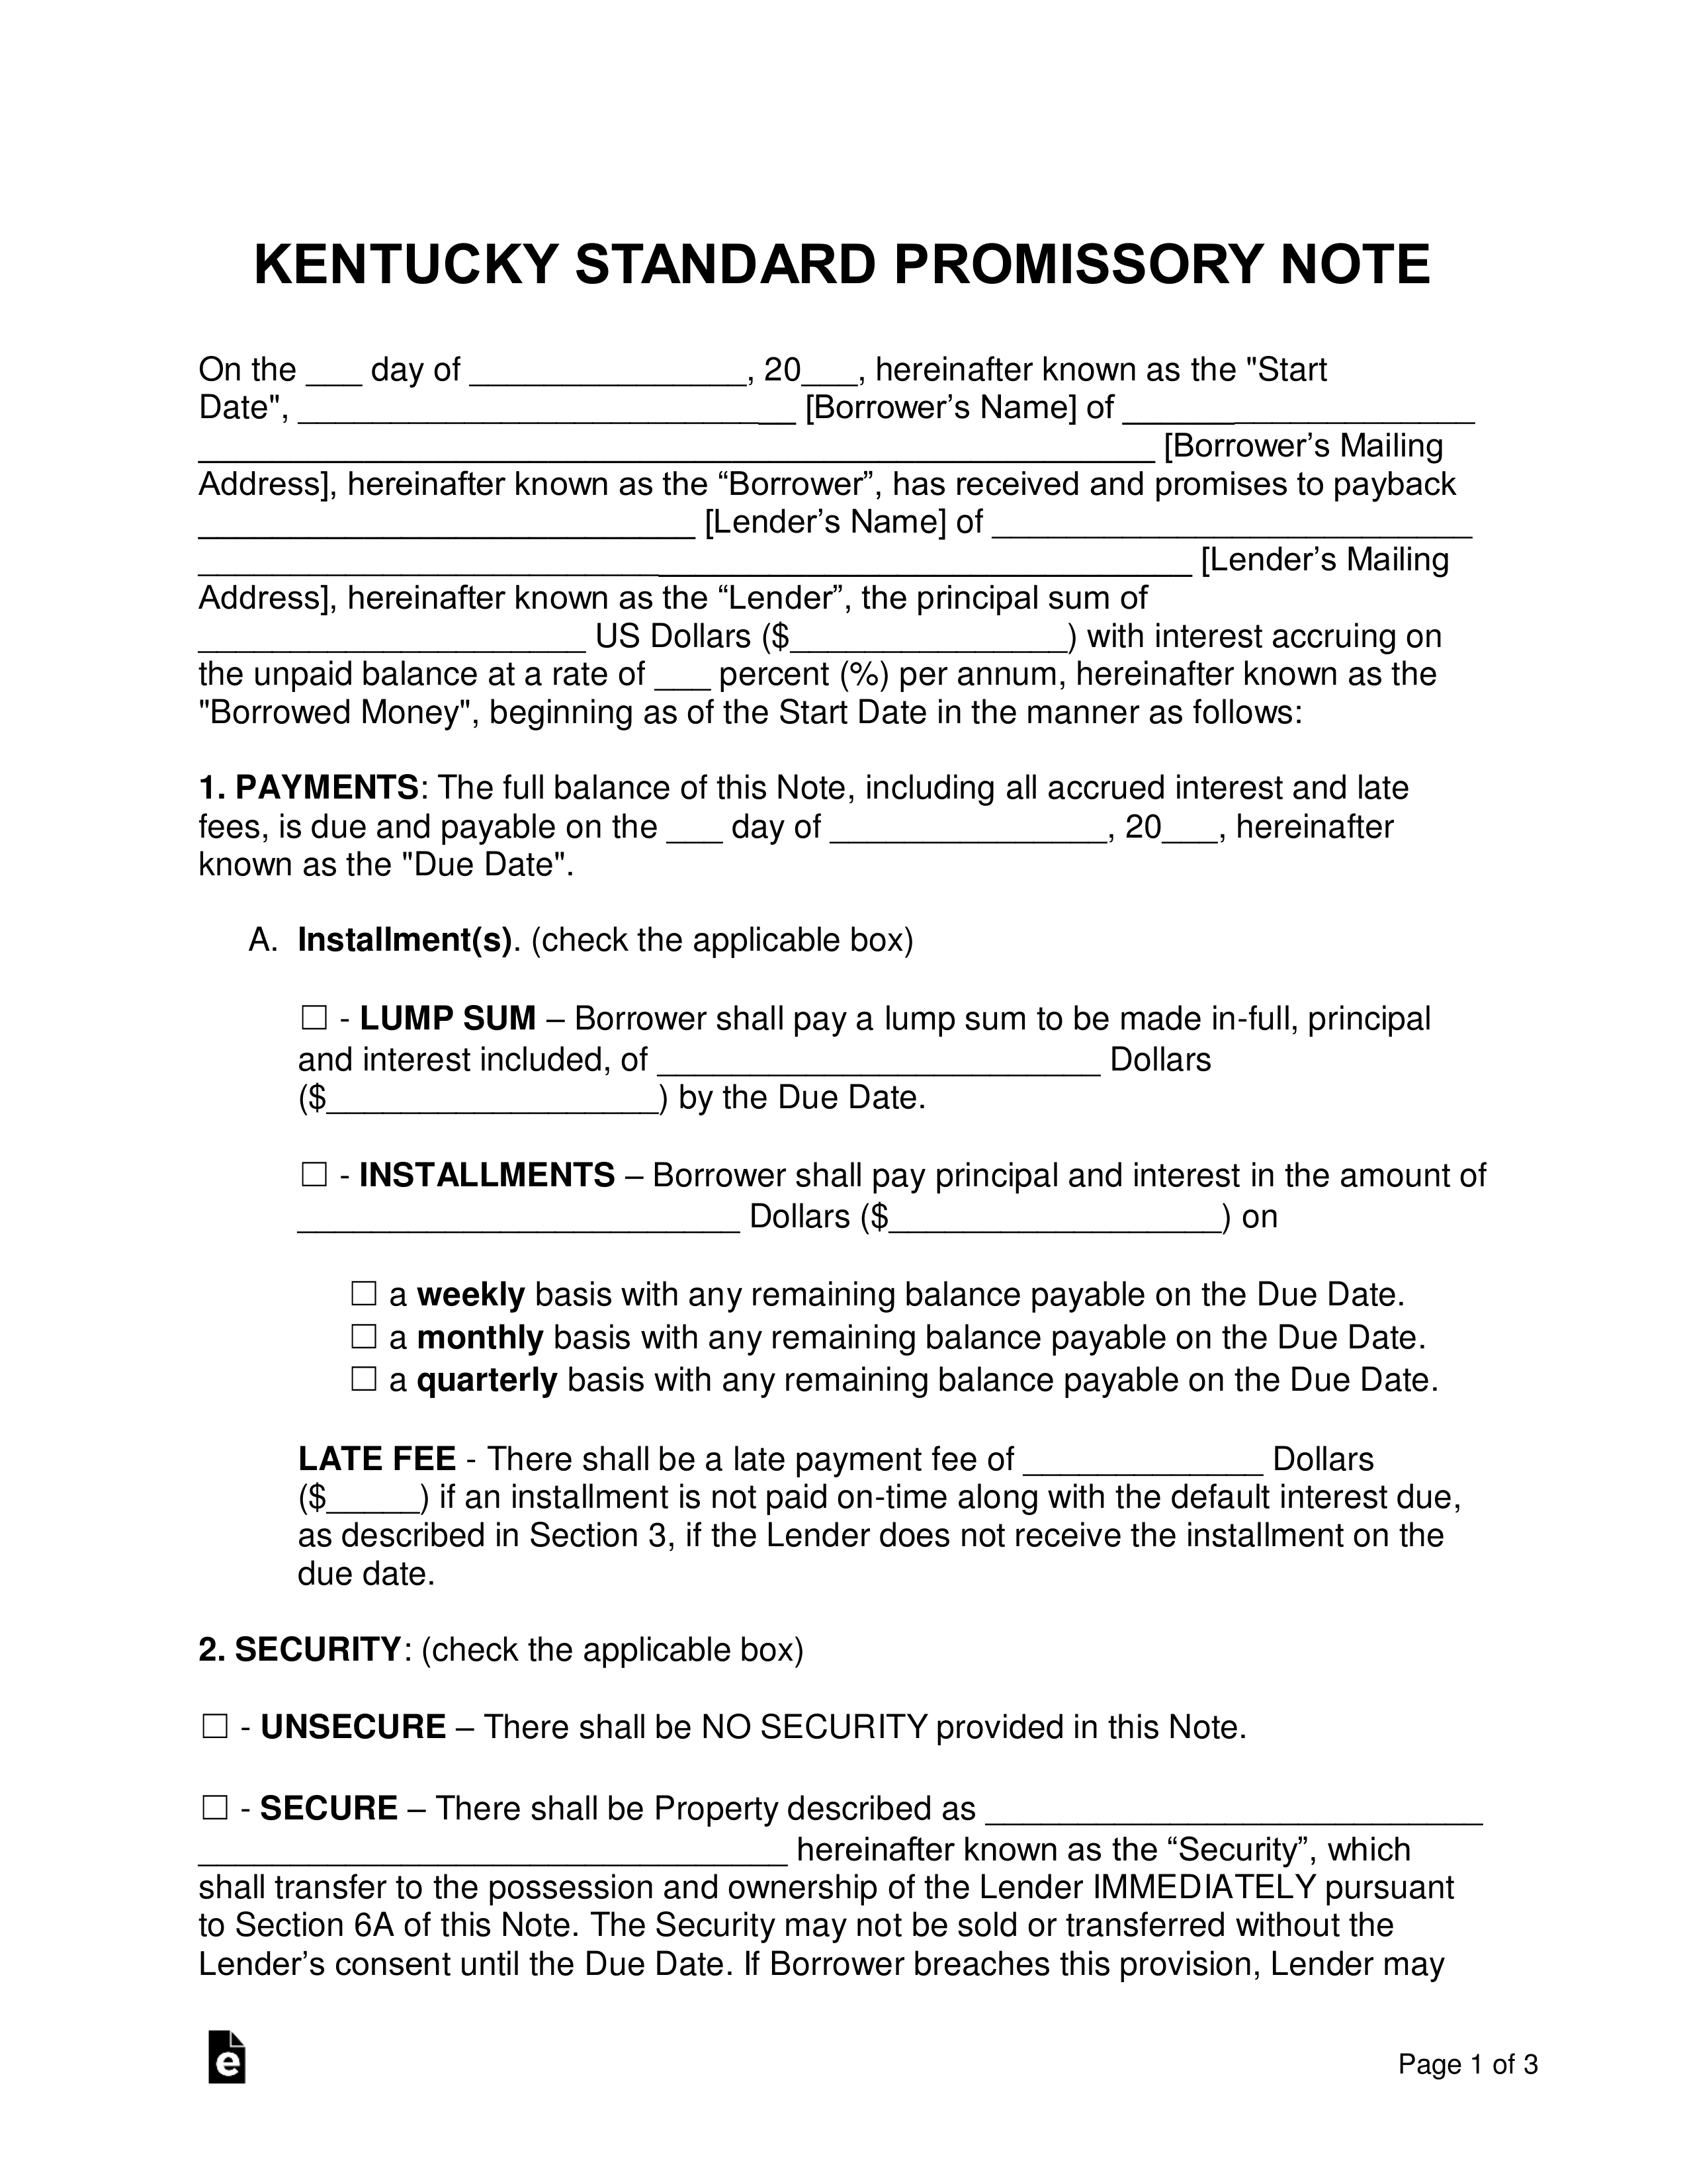 Kentucky Promissory Note Templates (2)